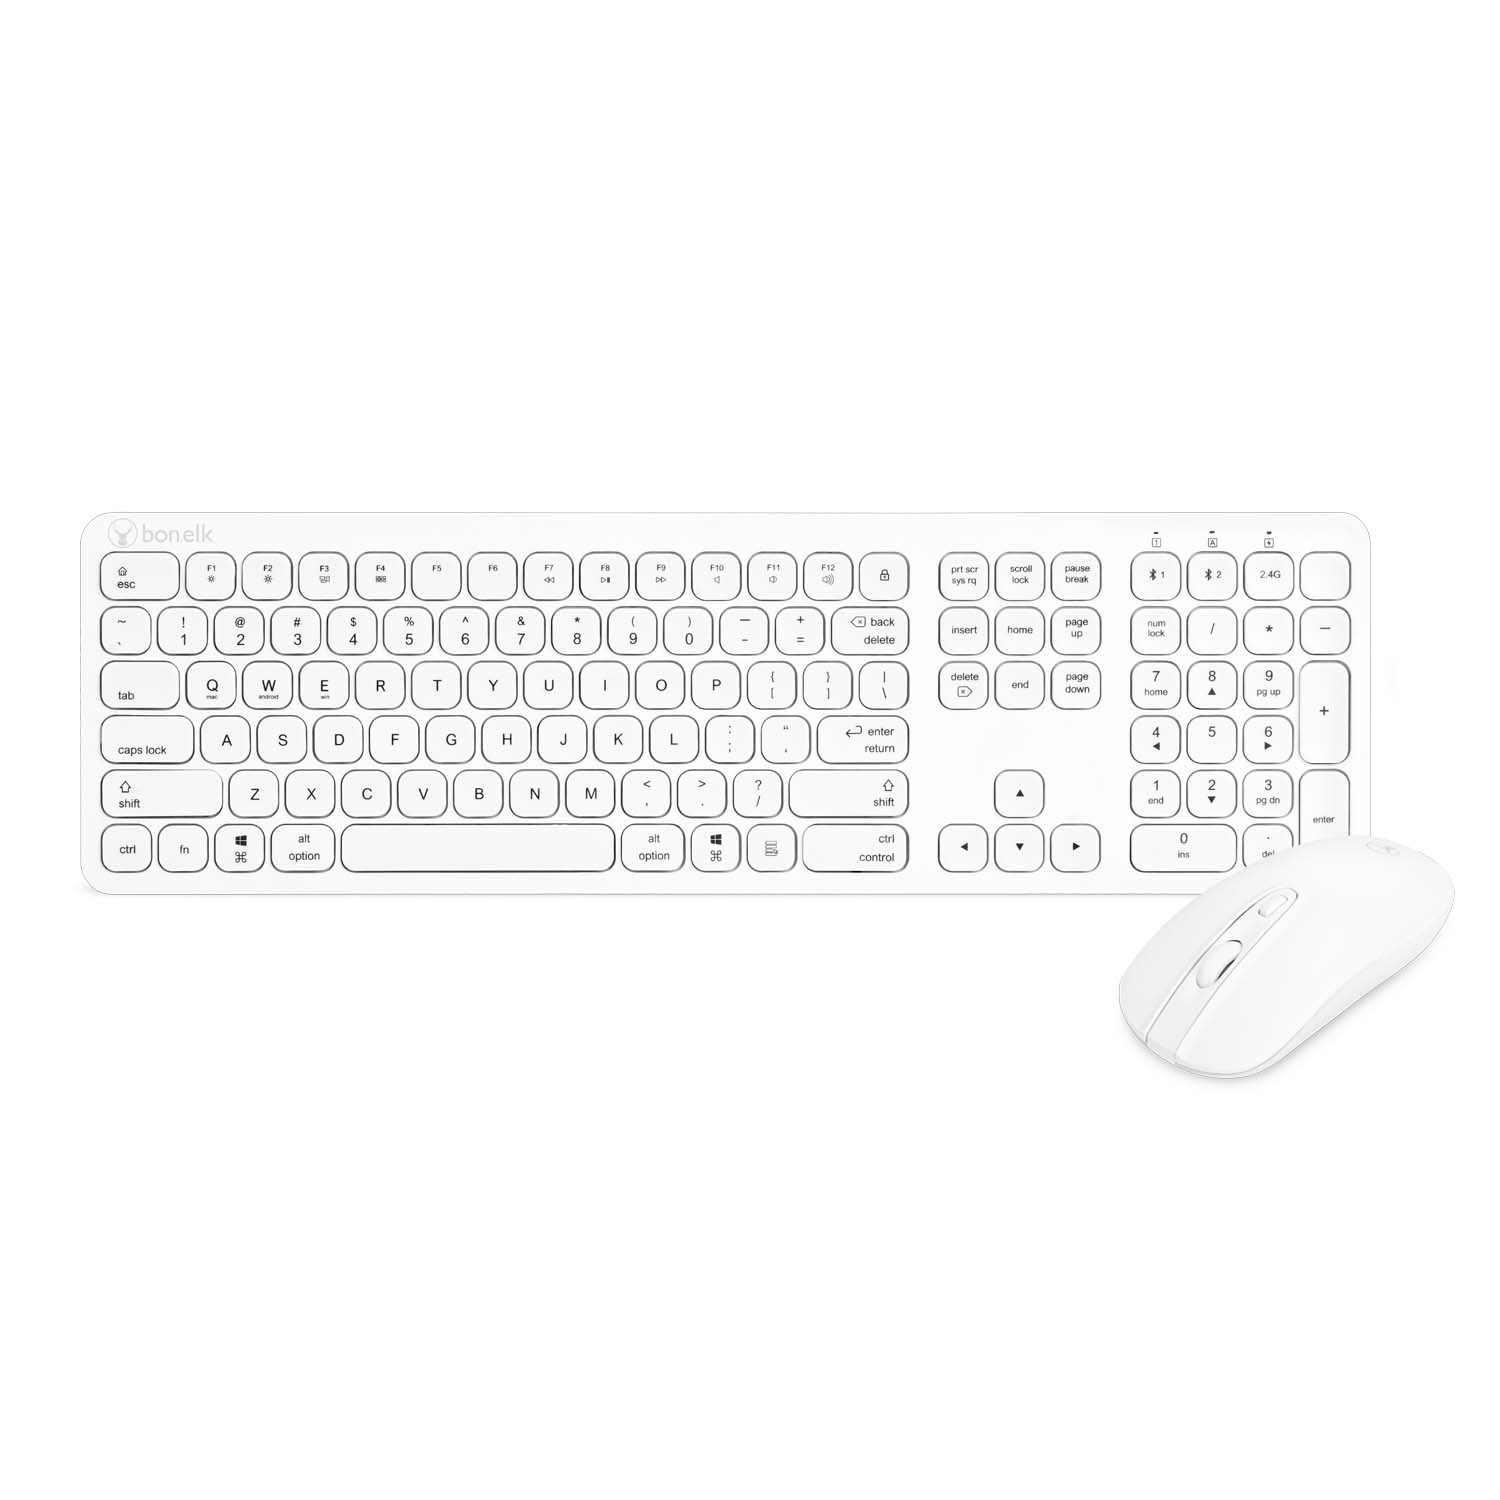 Bonelk KM-447 Slim Wireless Keyboard and Mouse Combo